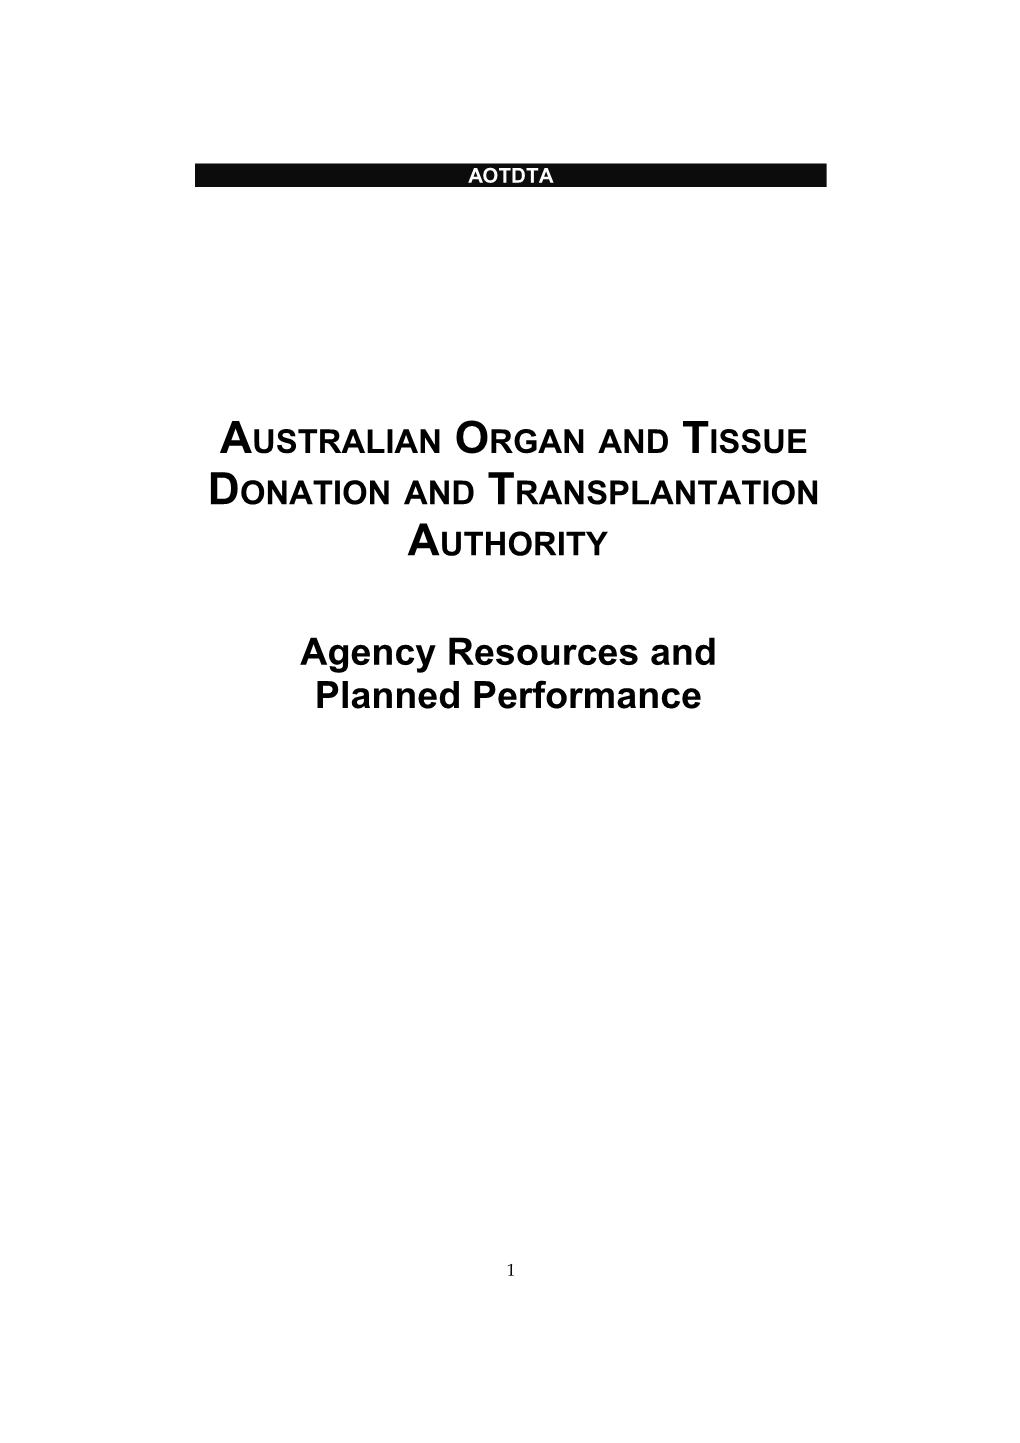 Australian Organ and Tissue Donation and Transplantation Authority